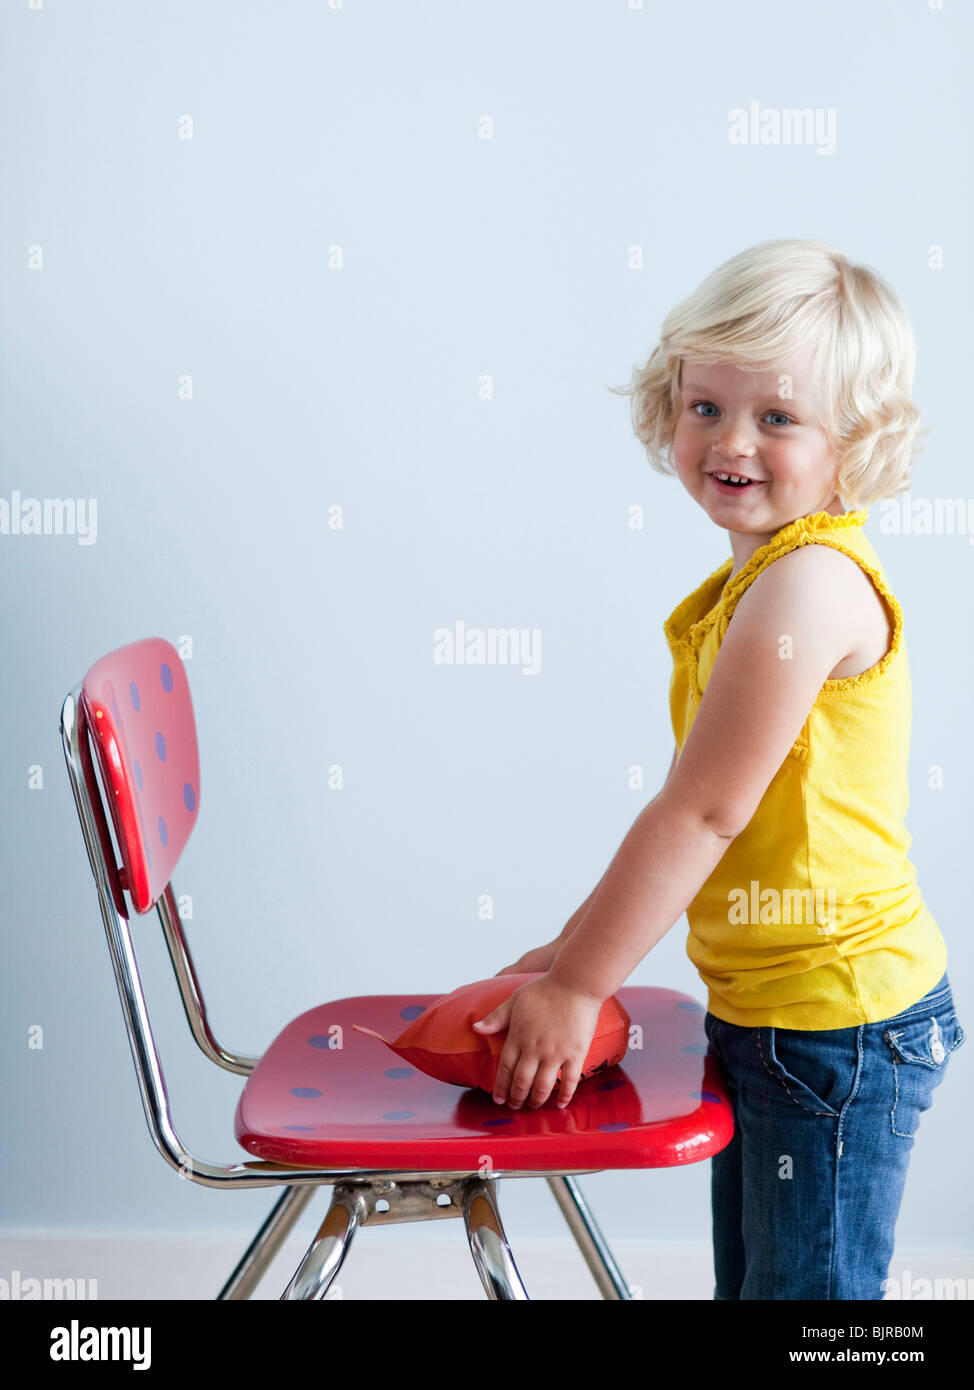 Girl (2-3) putting whoopie cushion on chair, smiling, studio shot Stock Photo